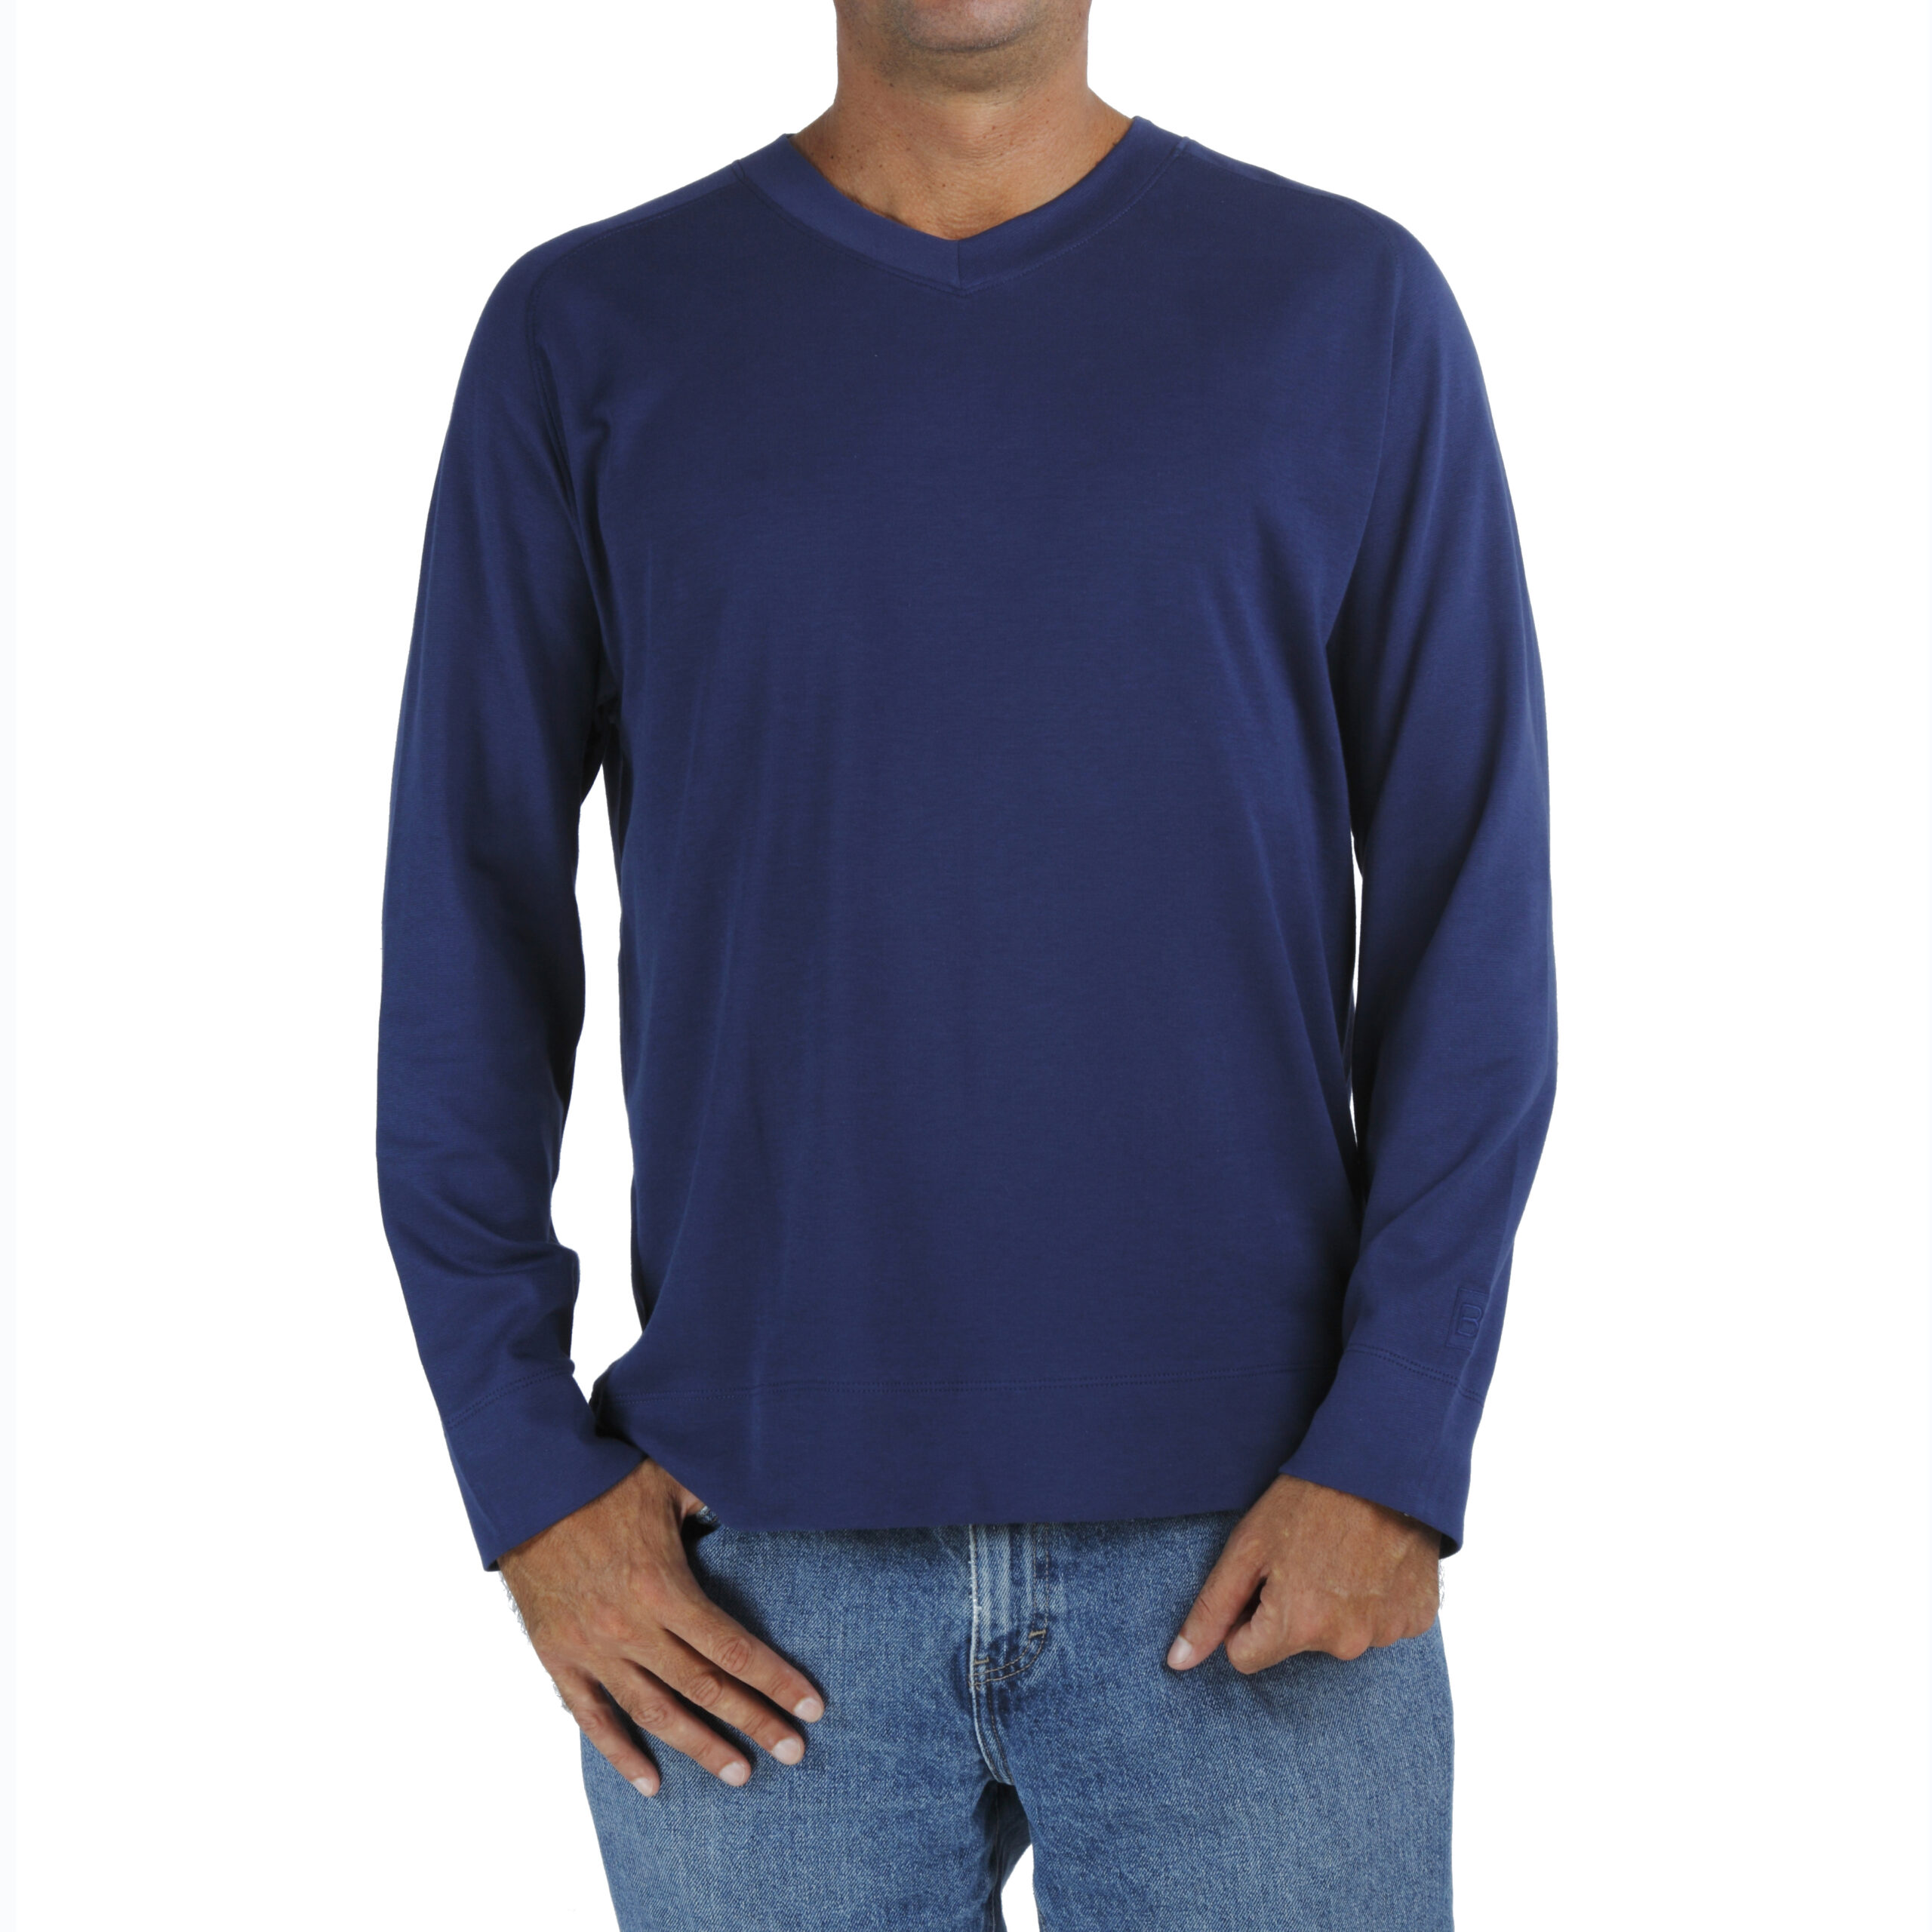 Buy > mens raglan long sleeve t shirt > in stock